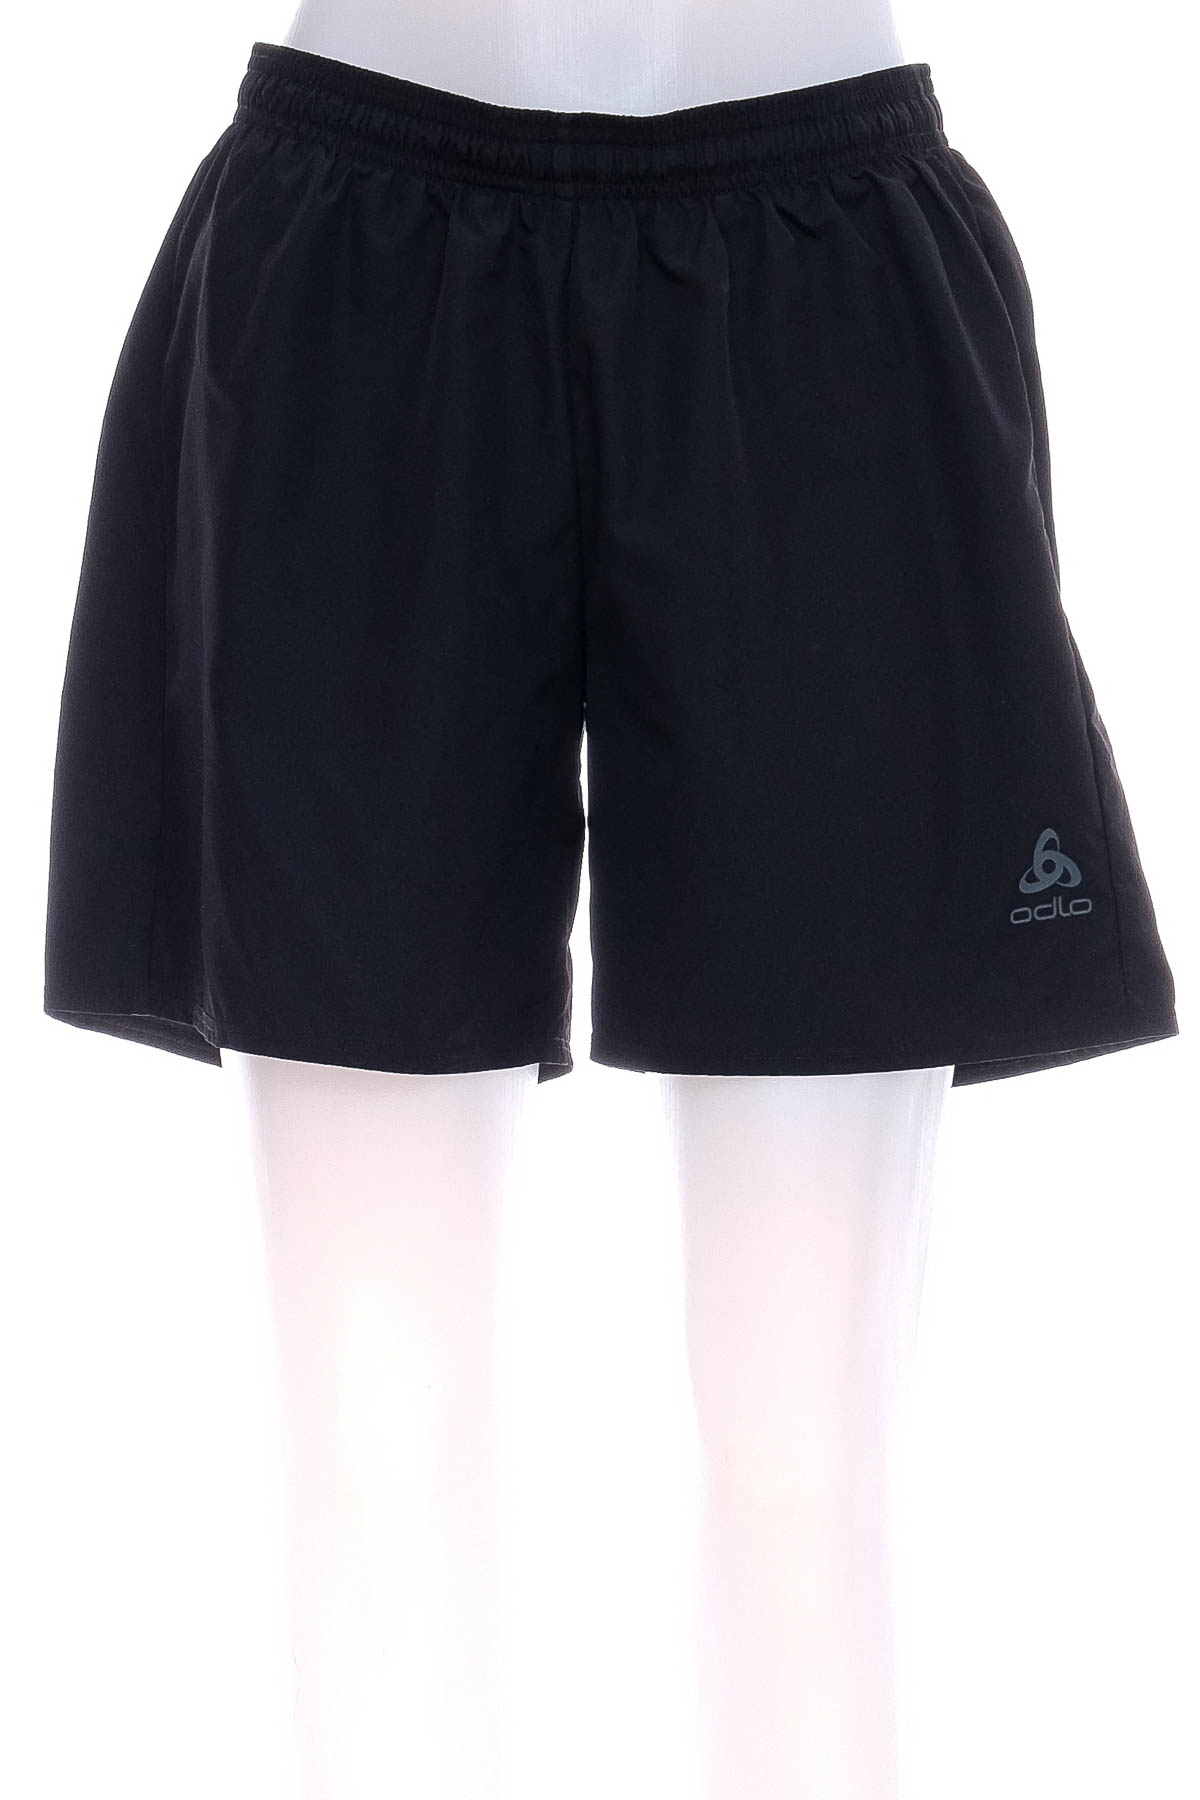 Men's shorts - Odlo - 0